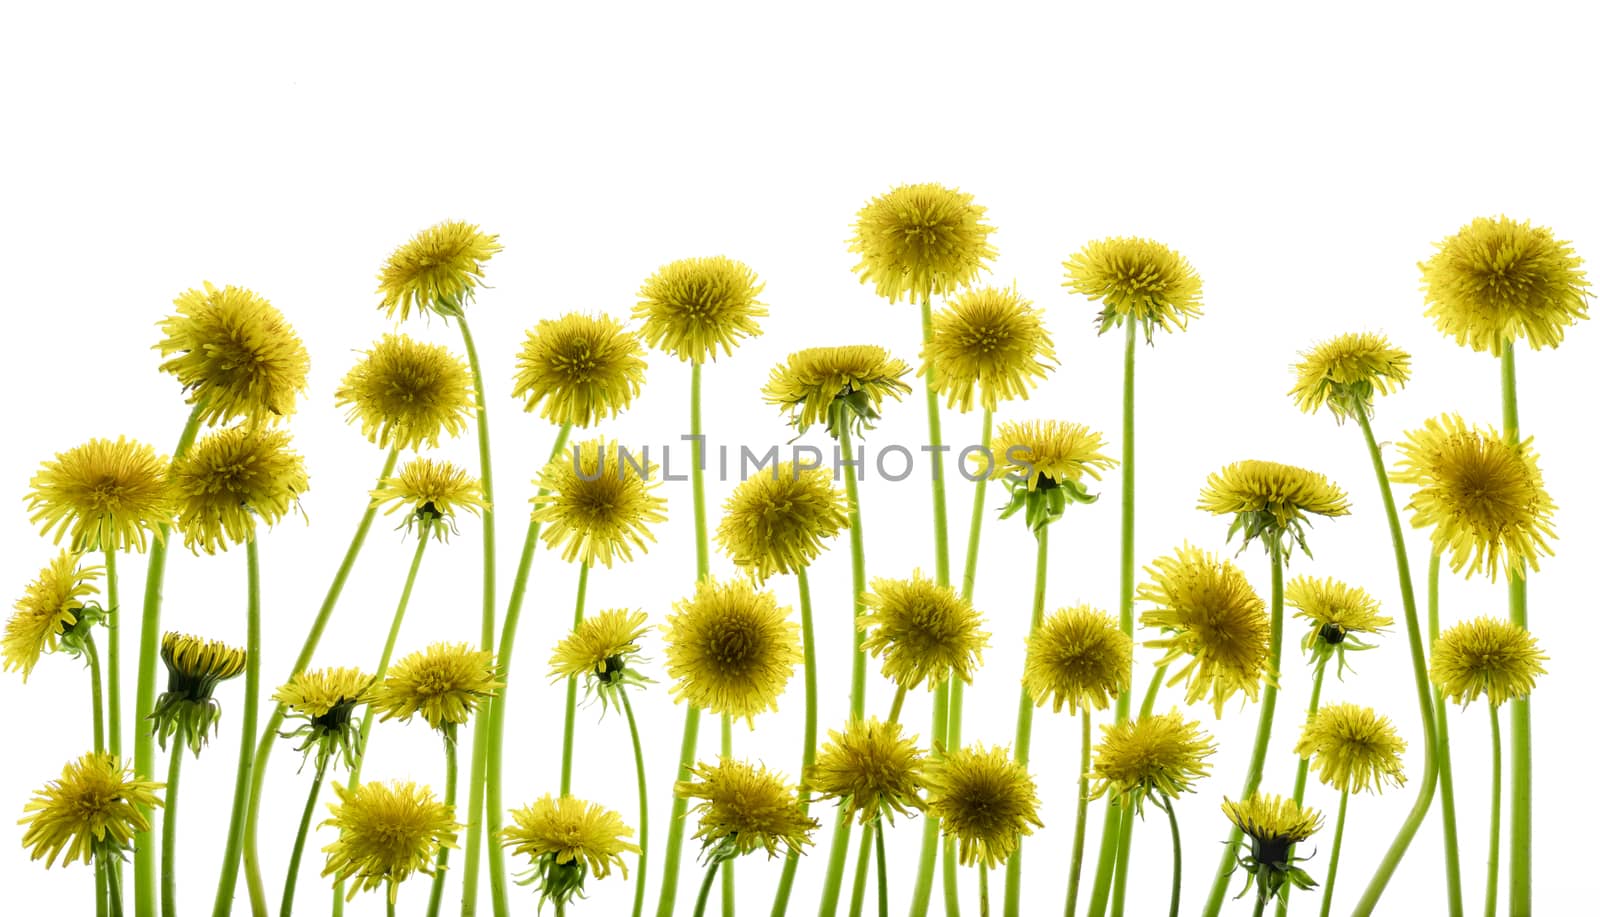 Healing plants. Dandelion isolated on white background by sashokddt